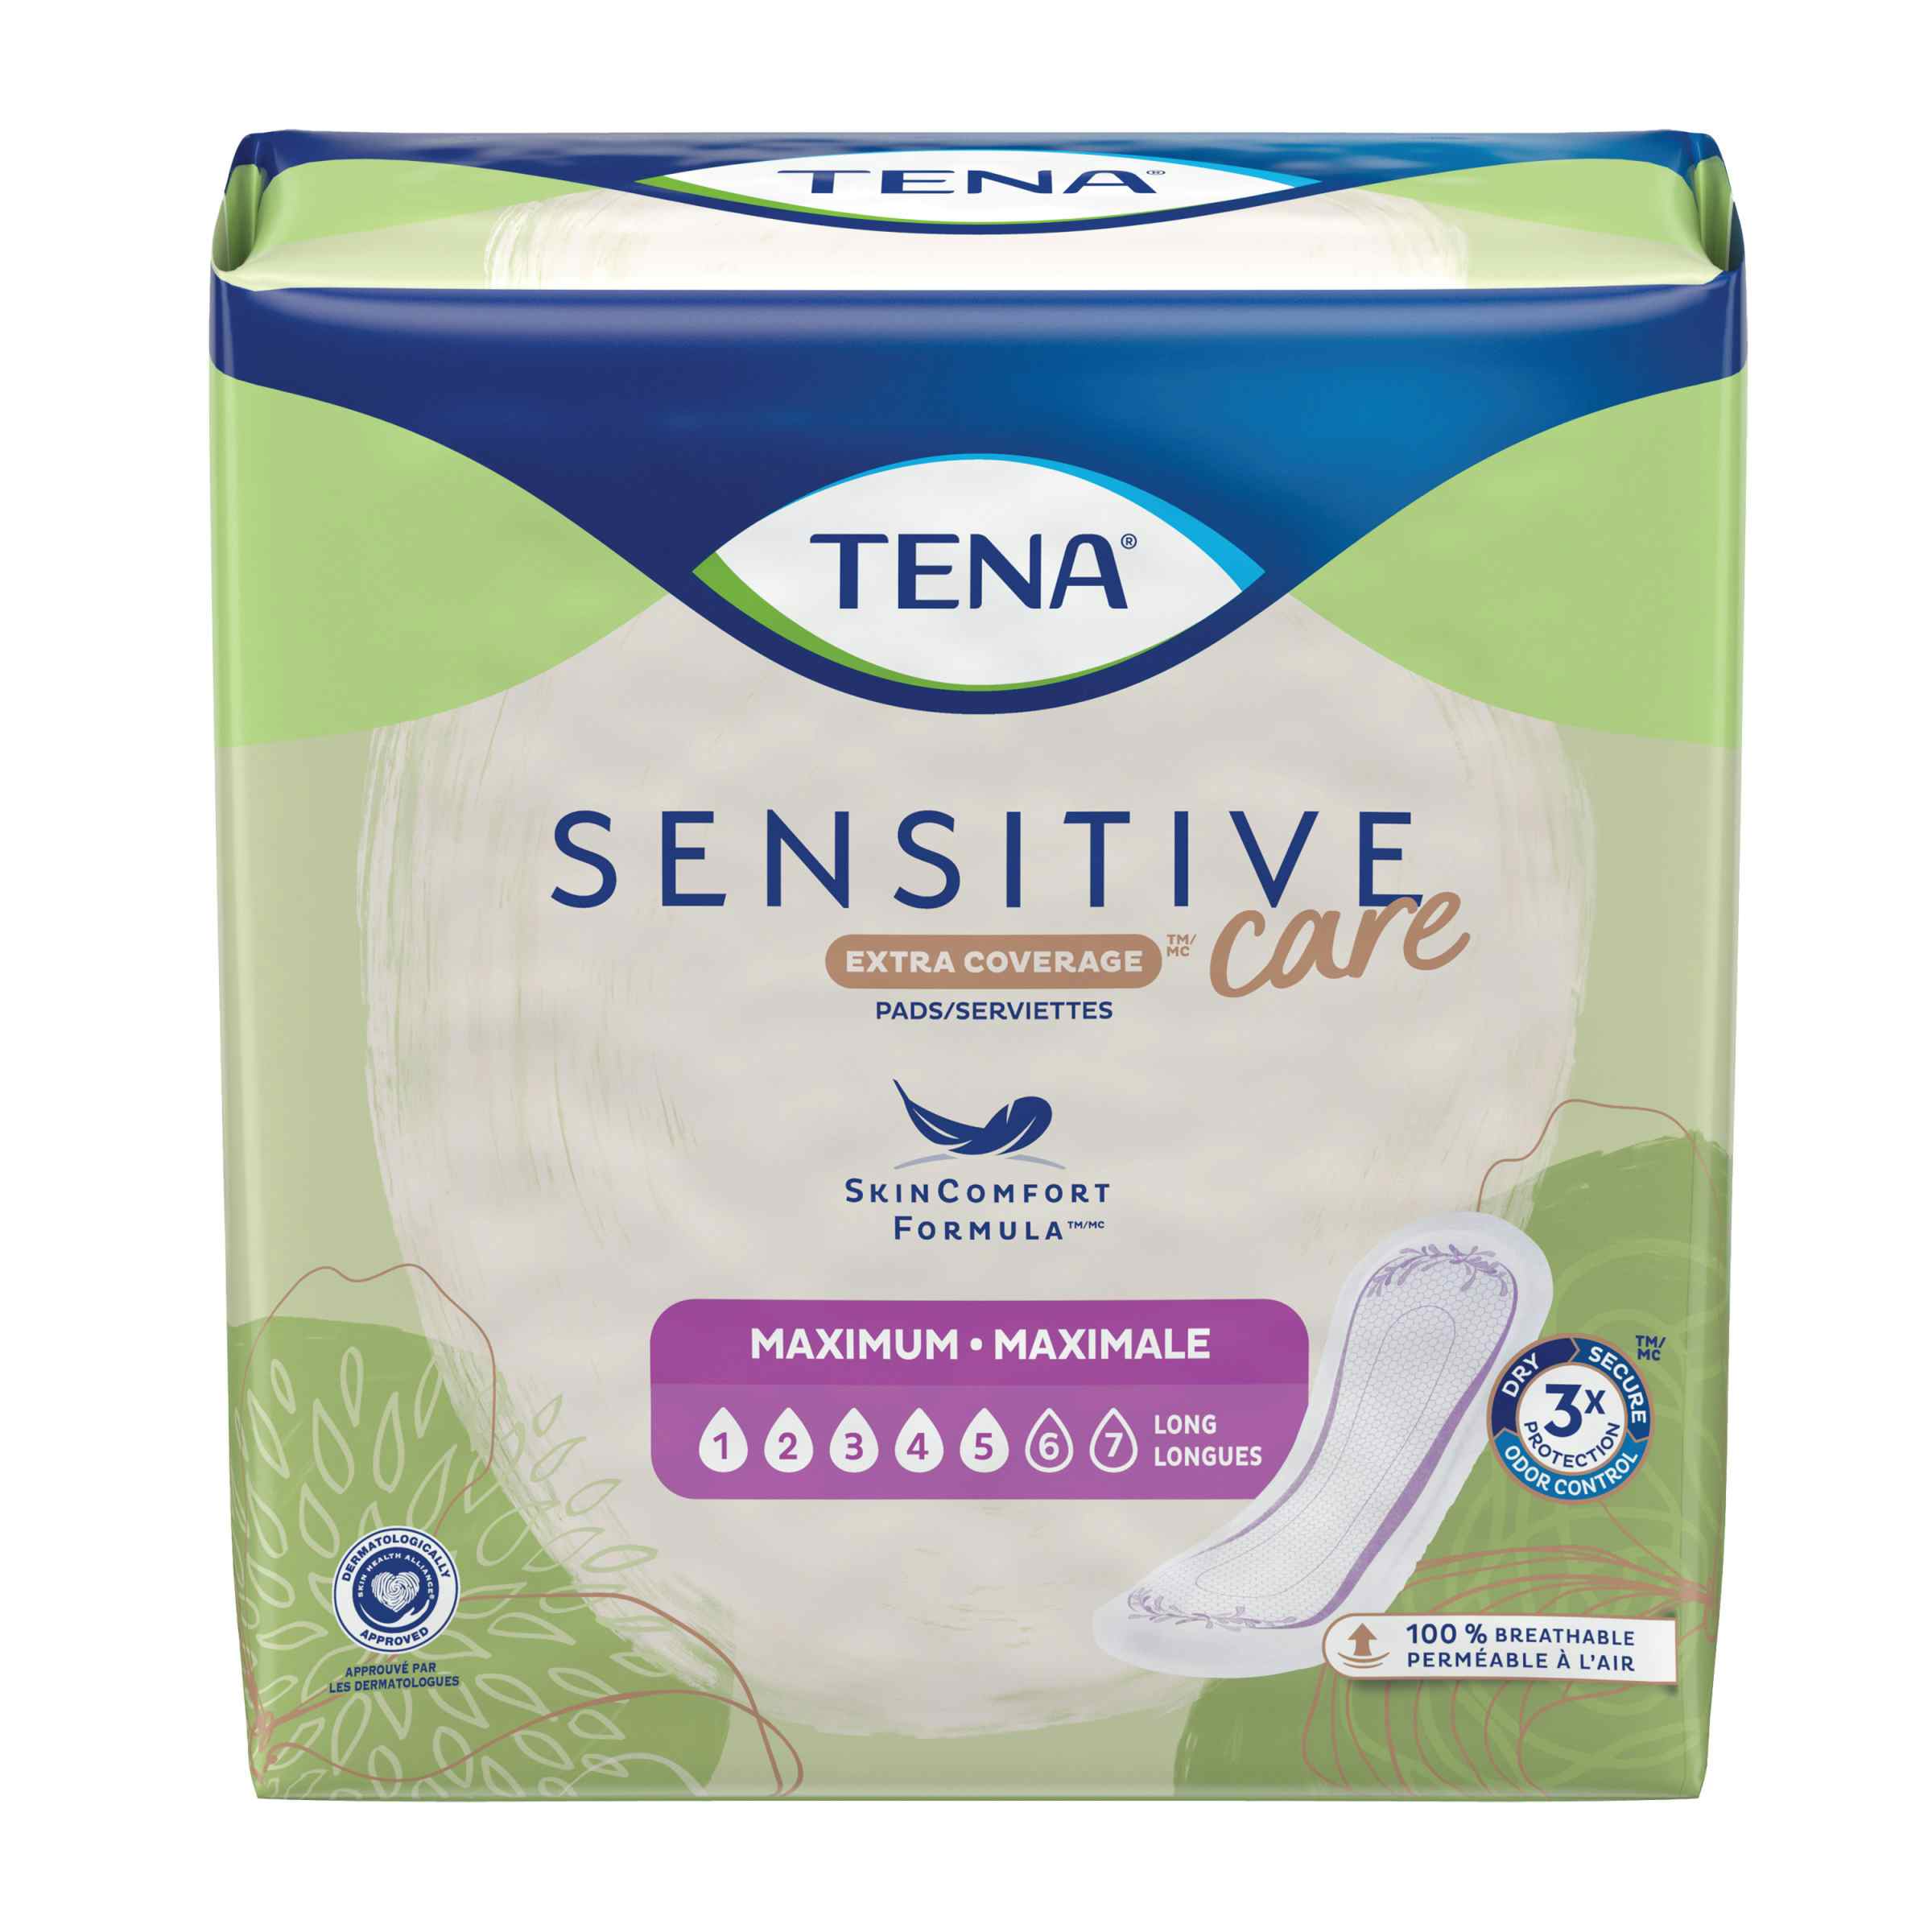 TENA Sensitive Care Maximum Bladder Pads